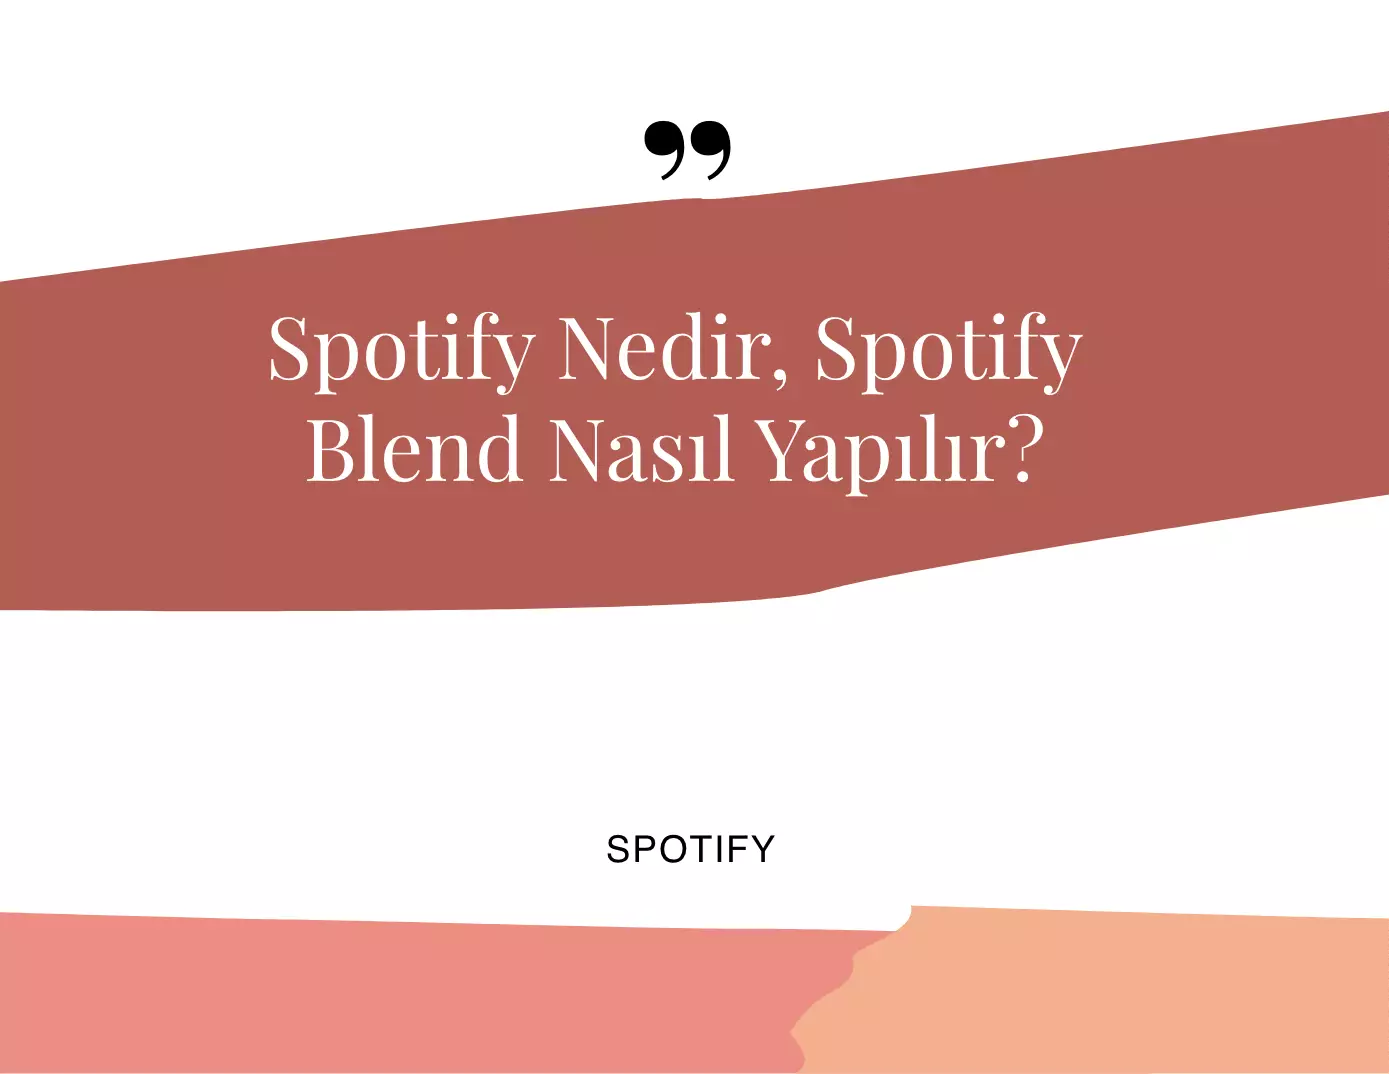 Spotify Nedir, Spotify Blend Nasıl Yapılır?